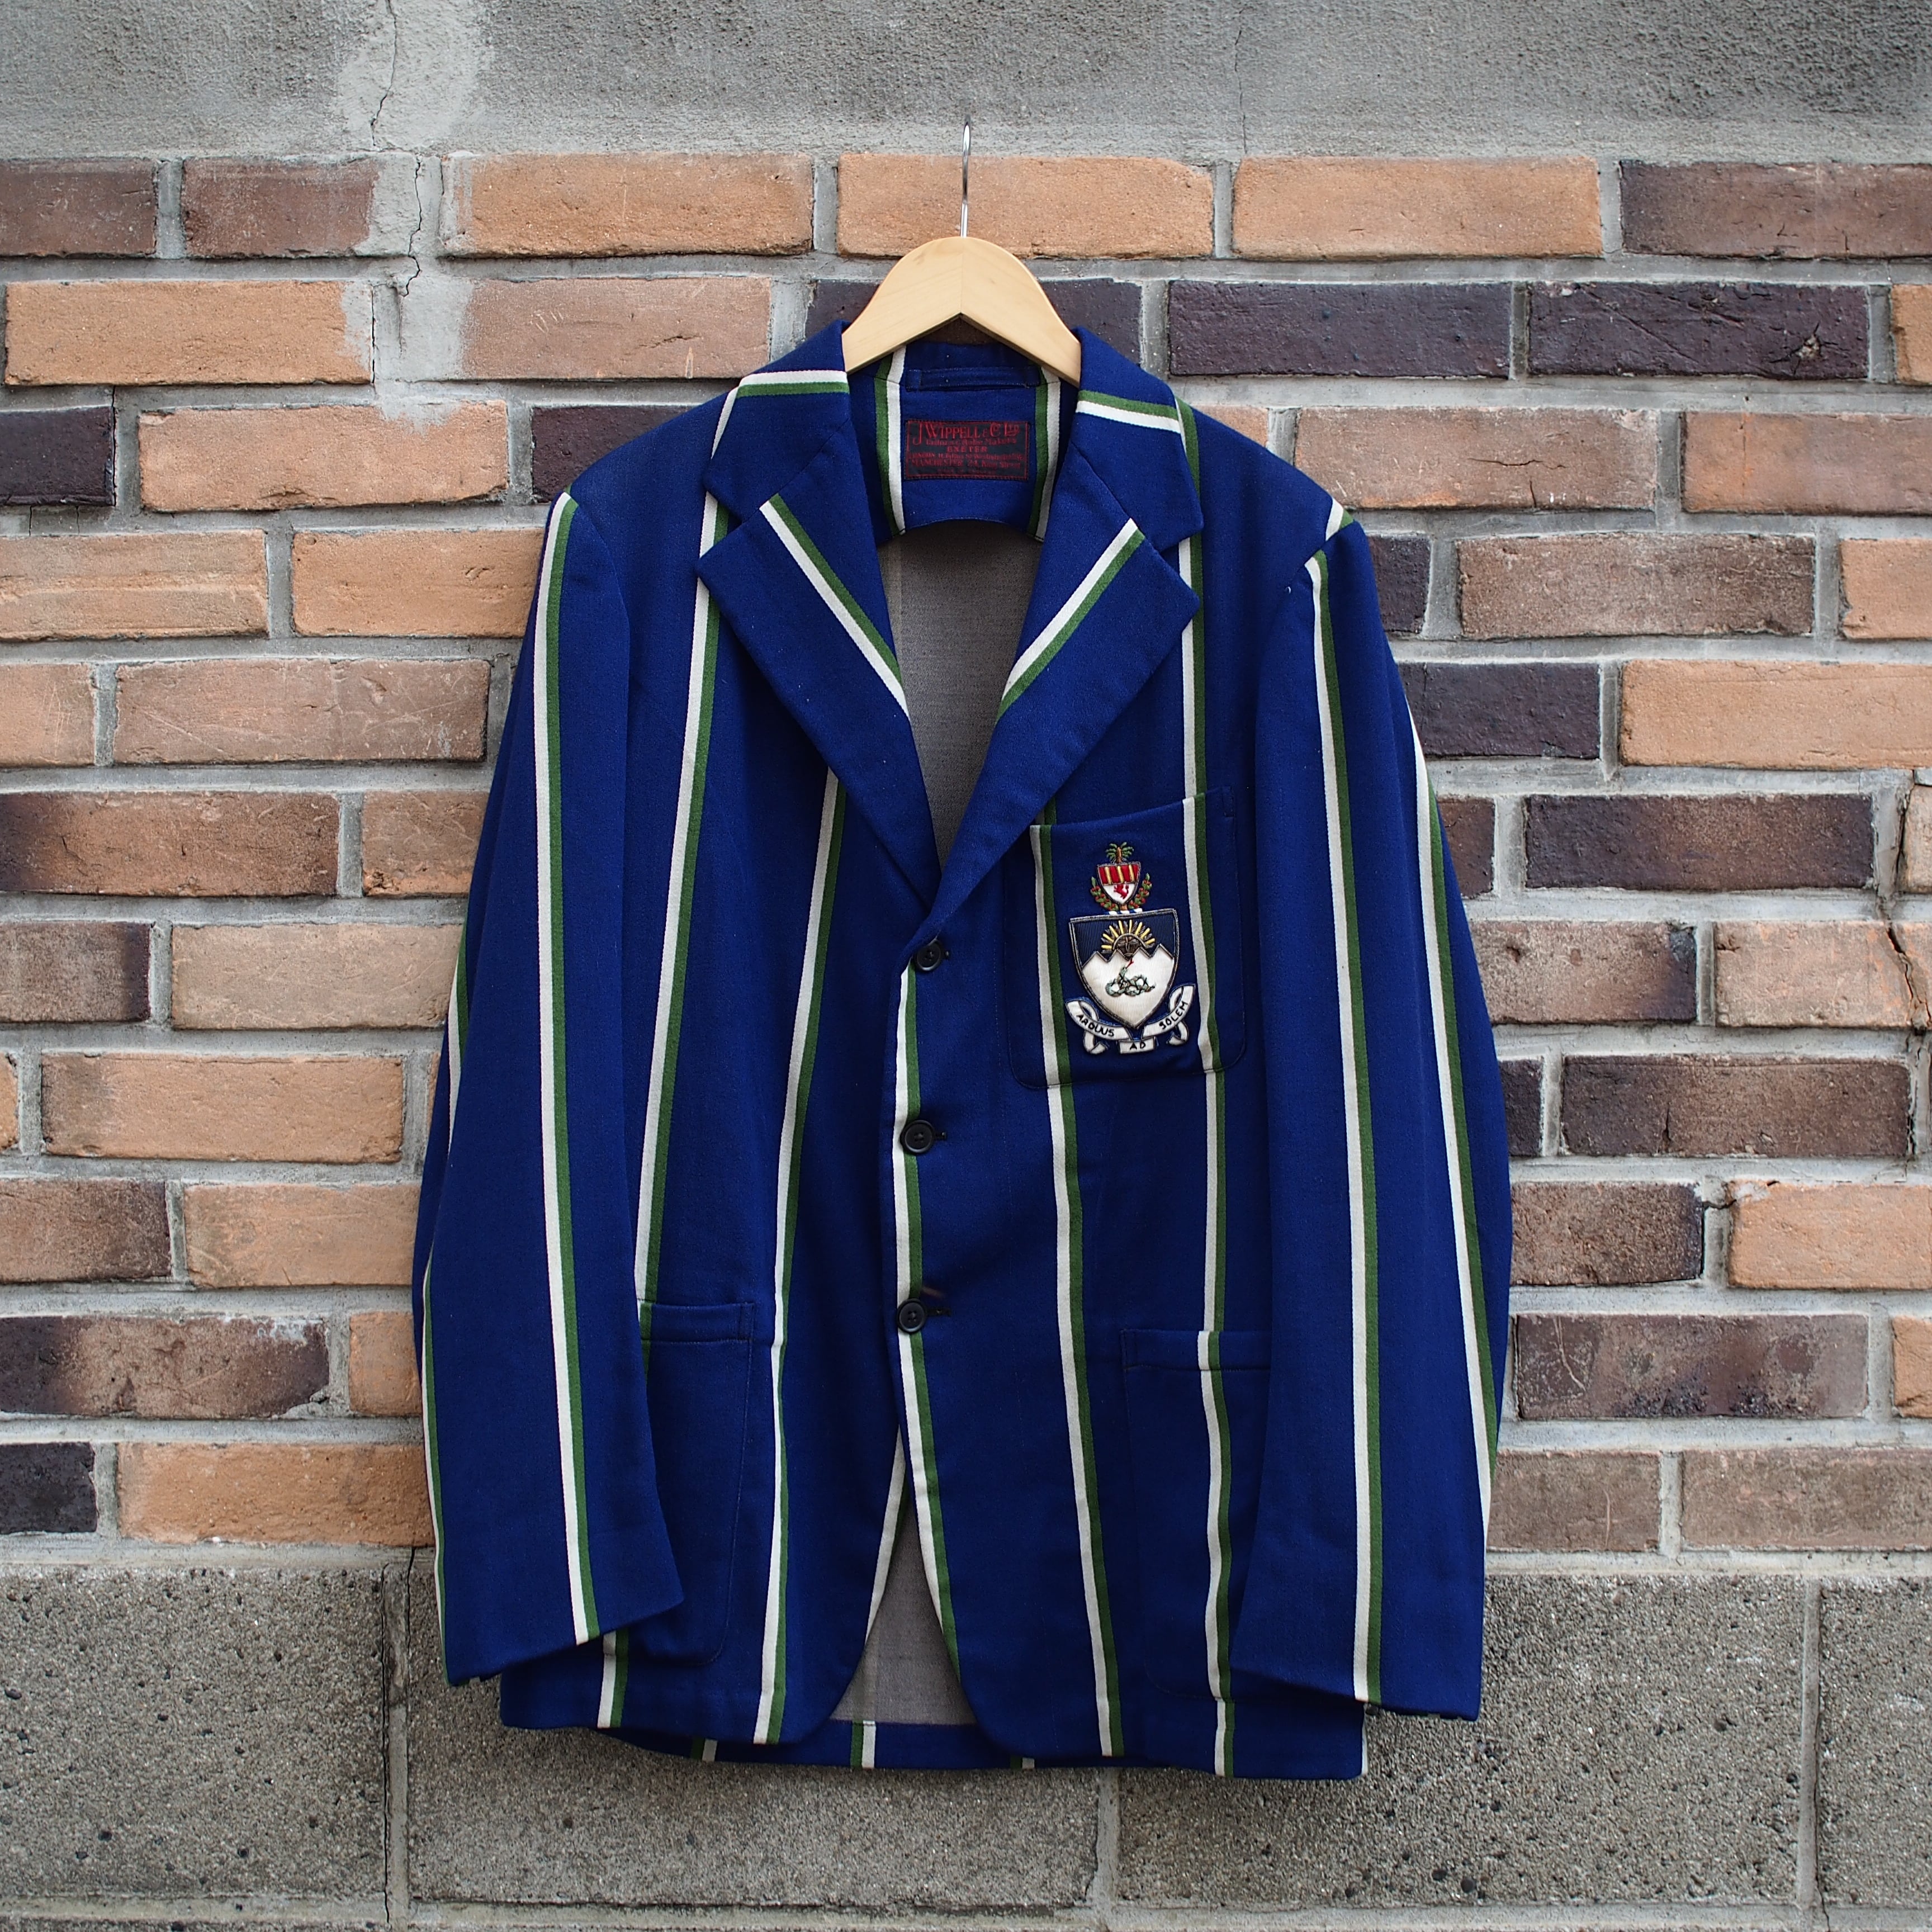 Blur! UK 〜1950's Vintage School Jacket イングランド製 ビンテージ スクールジャケット LITHIUM ×  Clover Over Dover